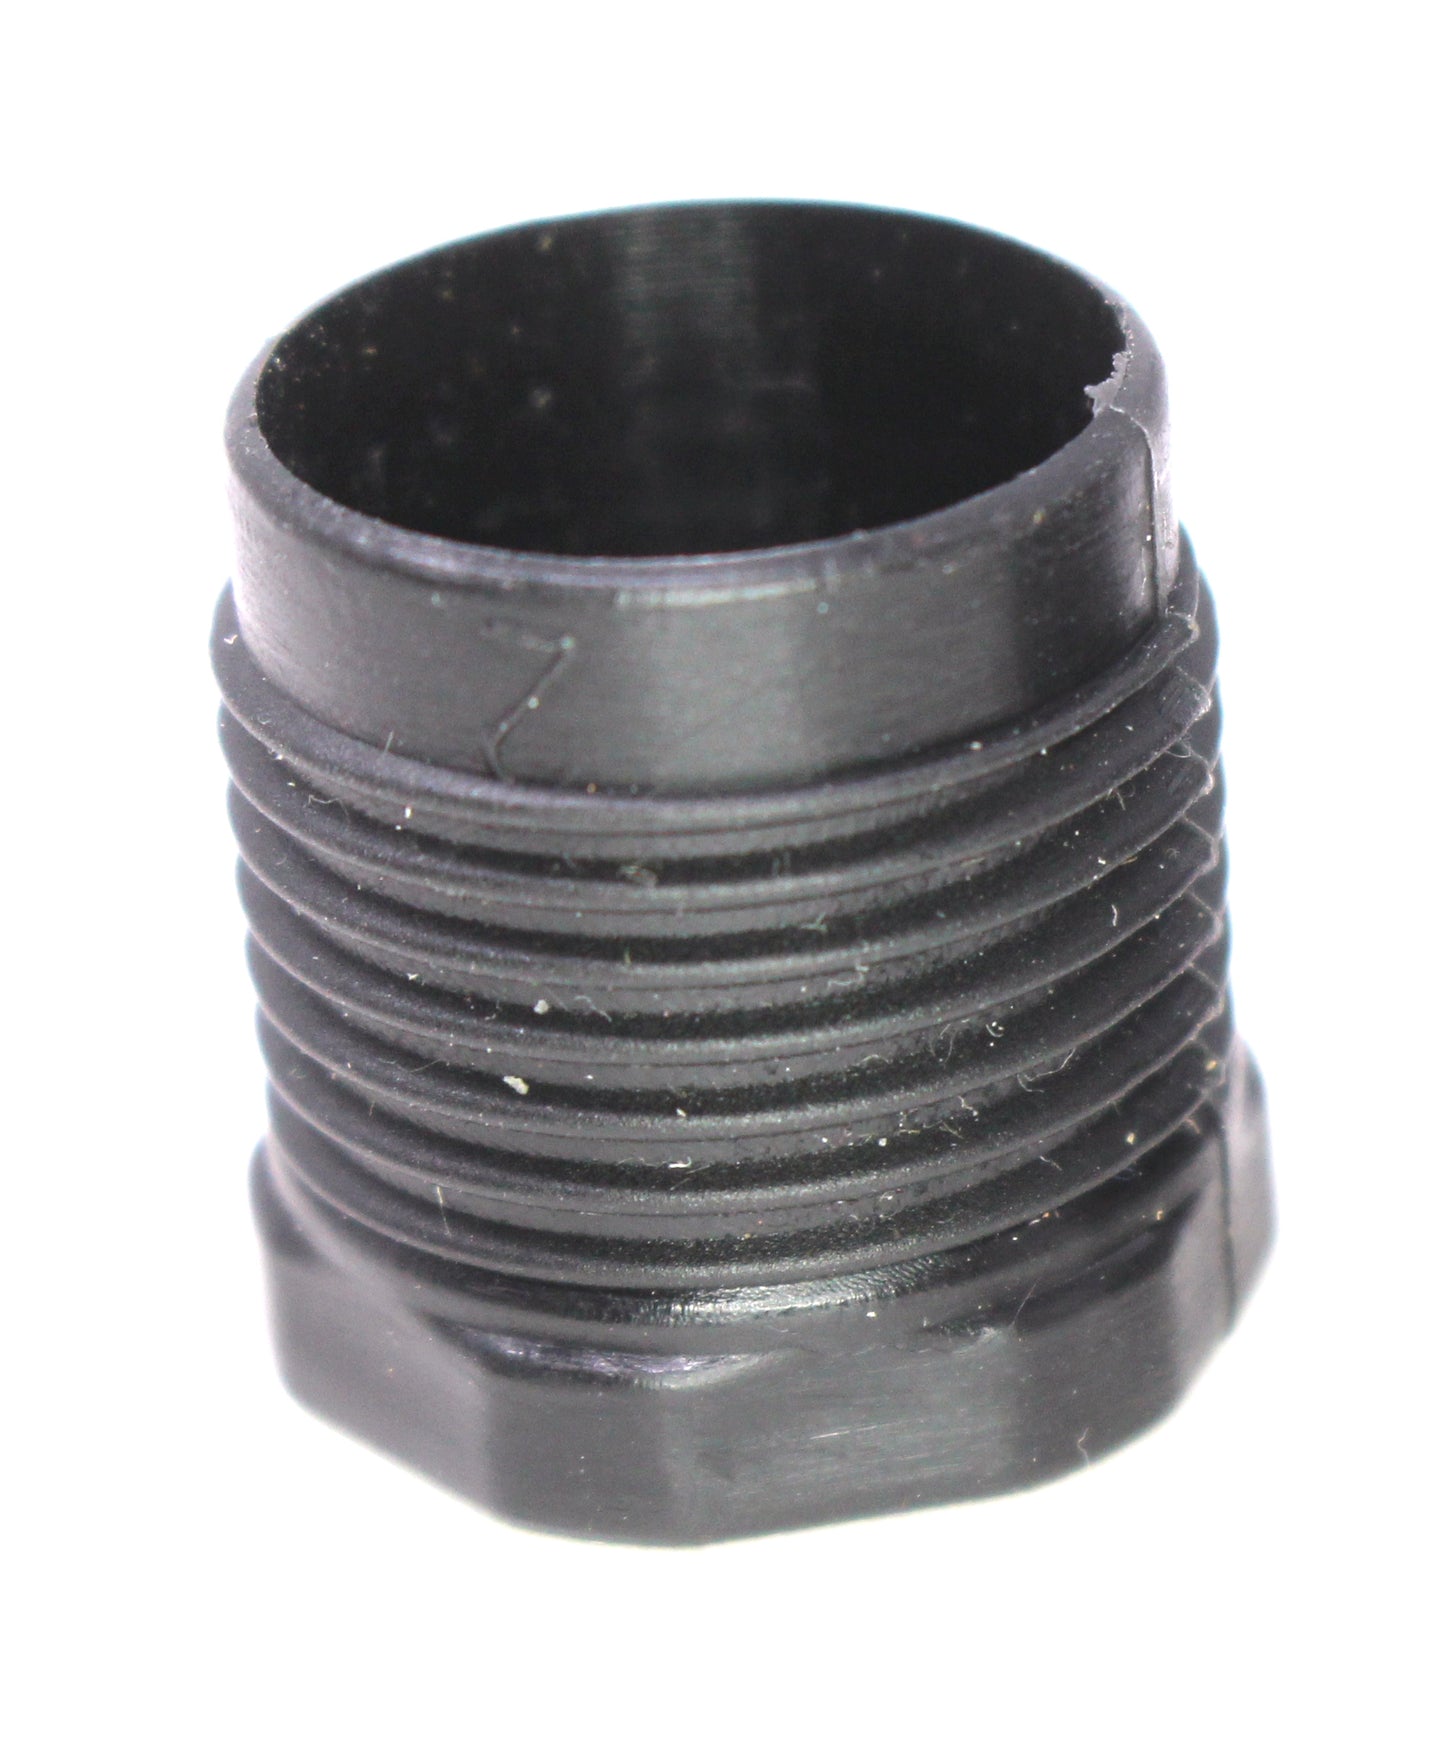 Aftermarket SeaDoo Steering Reverse Cable Plastic Lock Nut 277001729 277000784 277000052